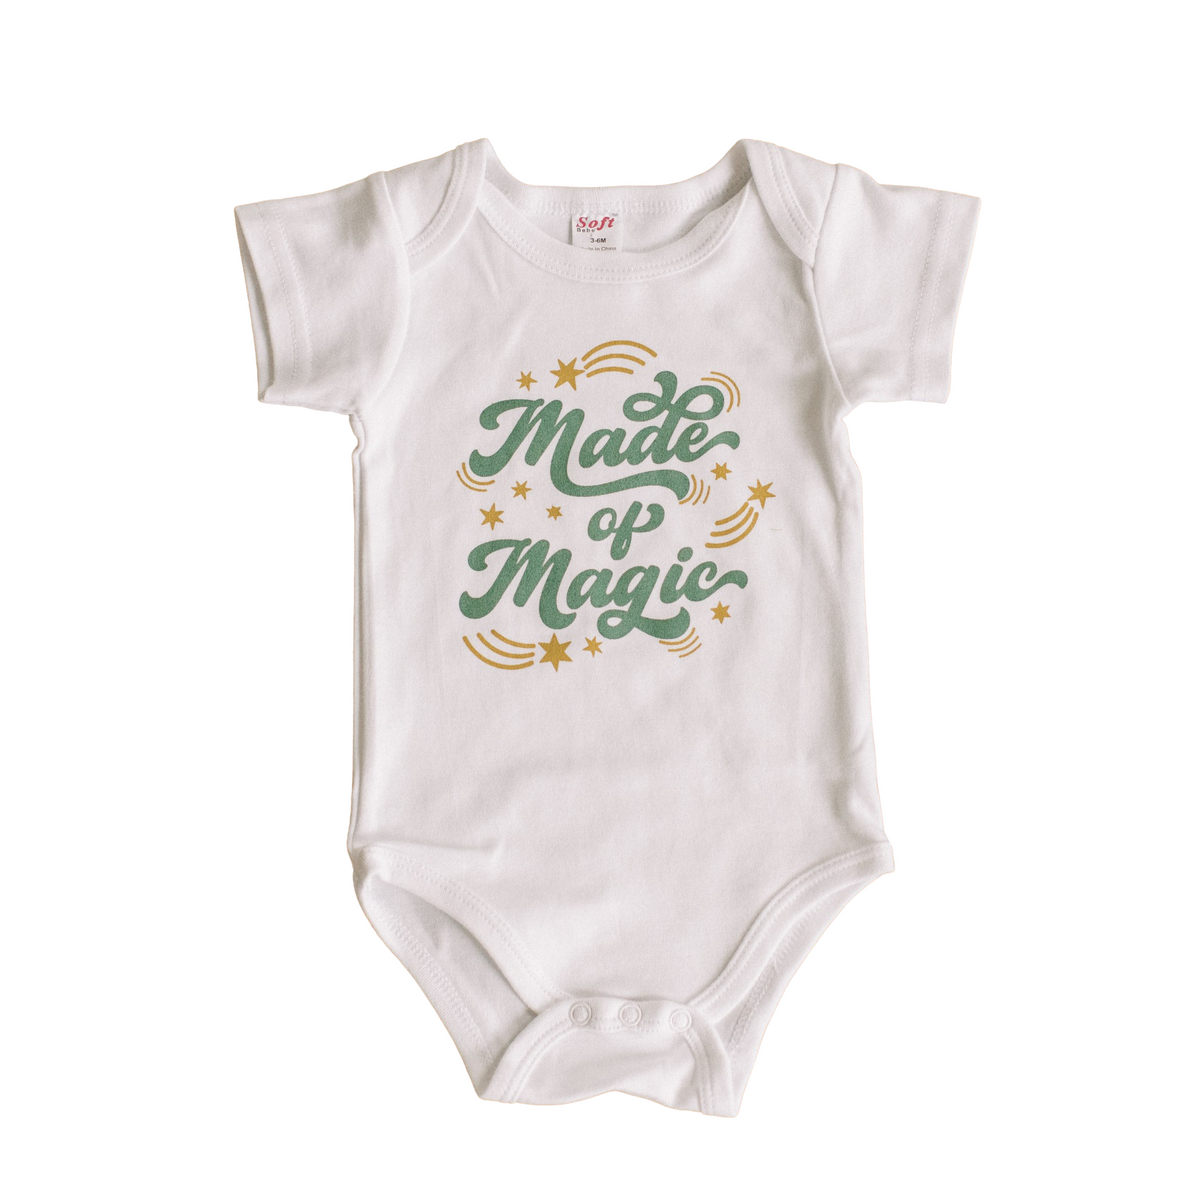 Made of Magic Baby Onesie Bodysuit